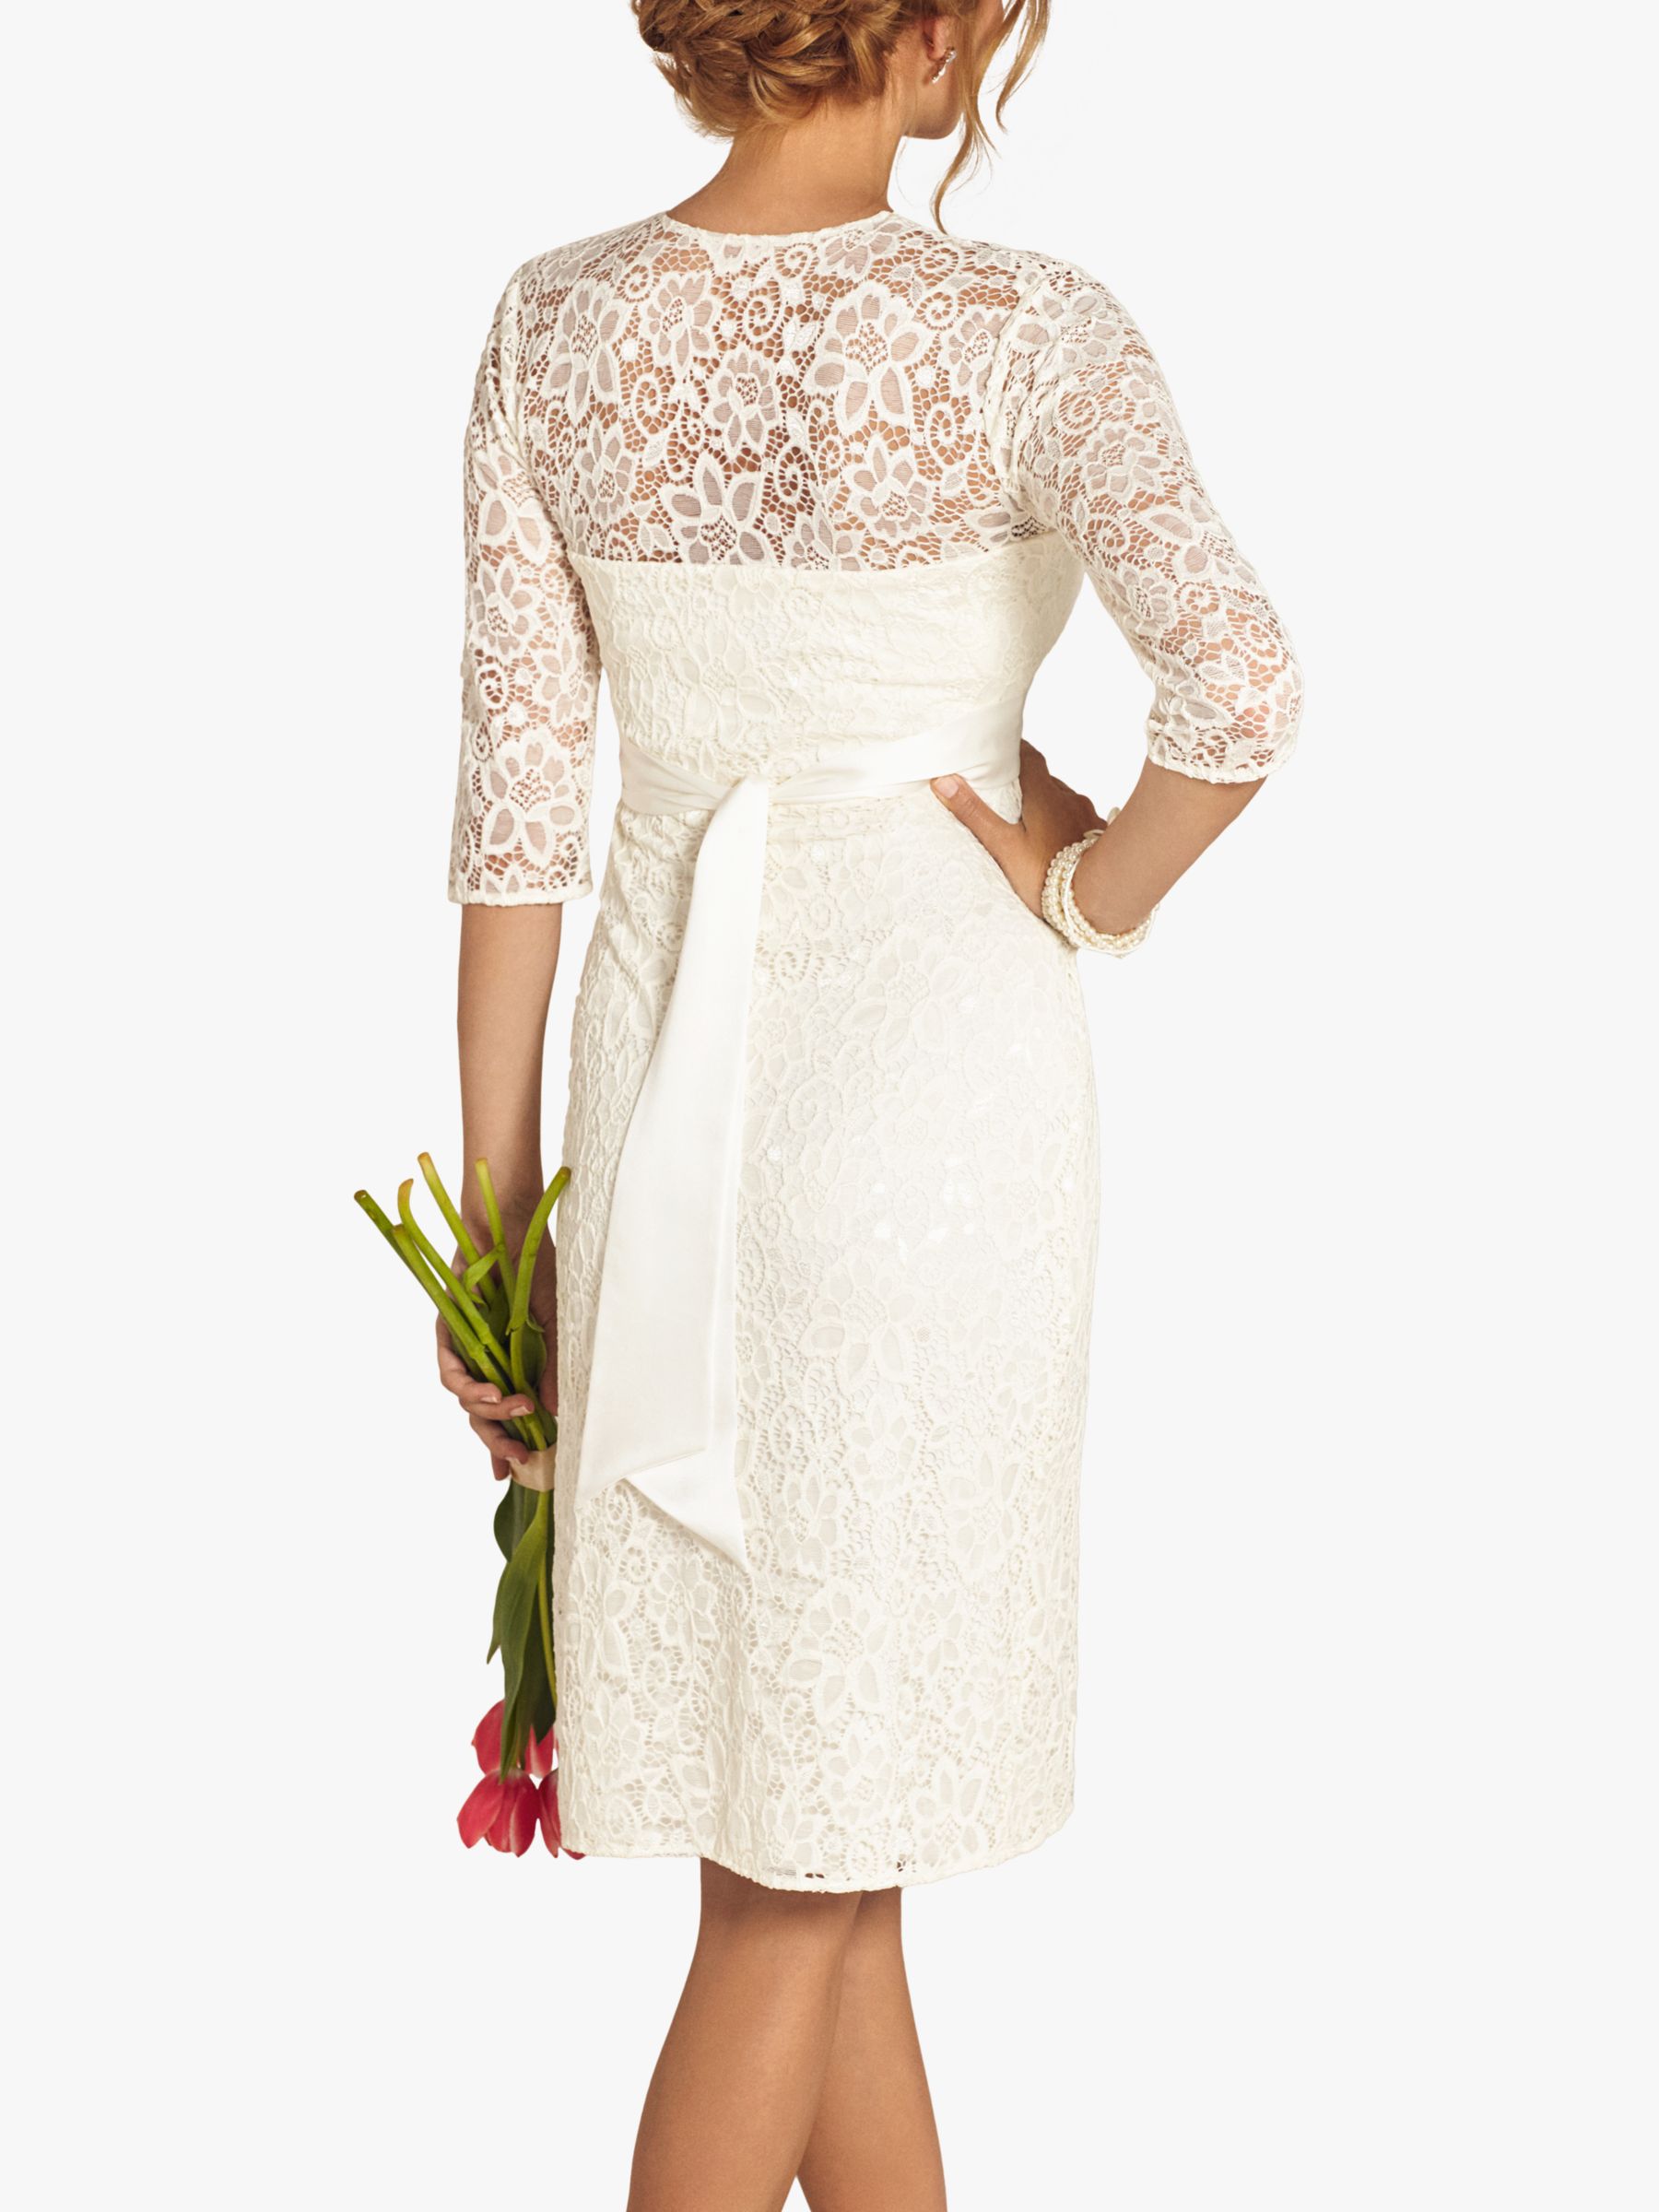 Tiffany Rose Suzie Maternity Floral Lace Wedding Dress, Ivory, 6-8